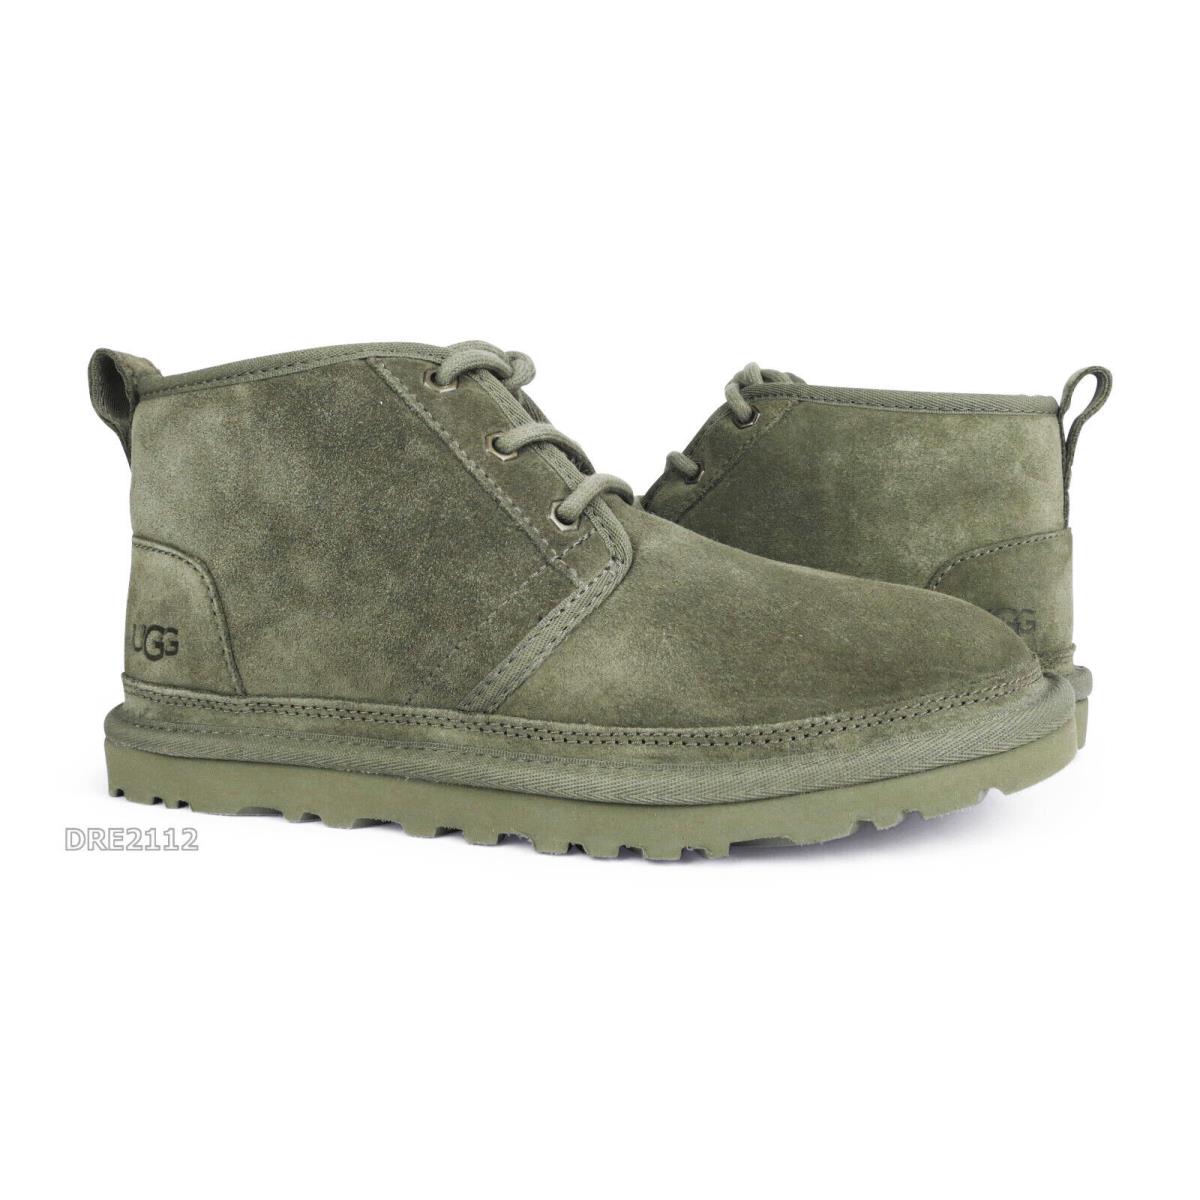 Ugg Neumel Burnt Olive Green Suede Fur Shoes Womens Size 9 -nib